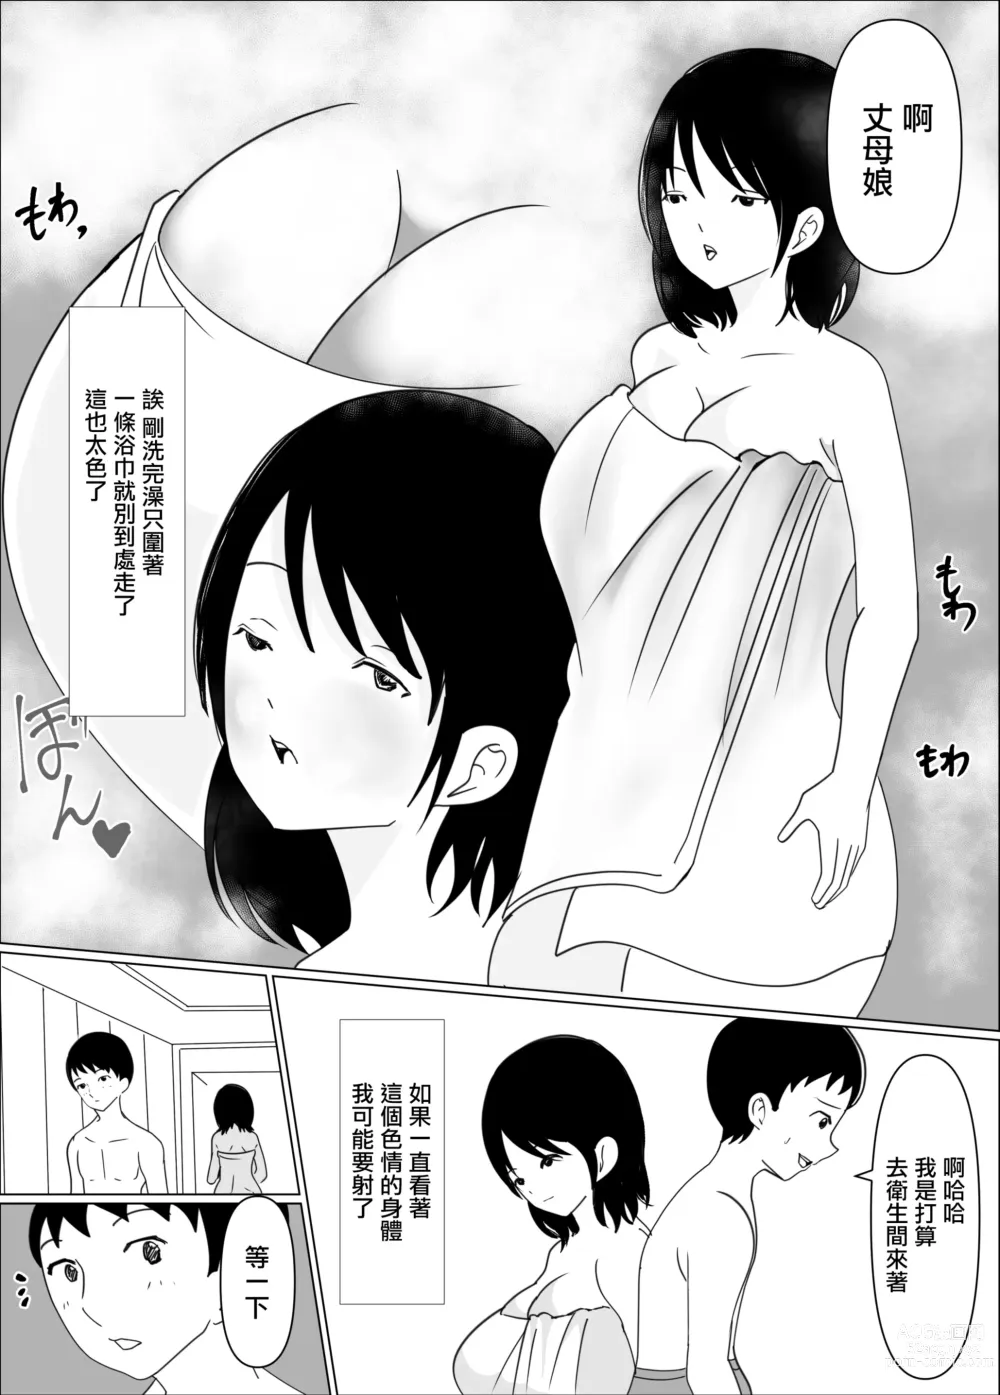 Page 3 of doujinshi 為了在妻子的排卵日授精而攢的精子被丈母娘看上了